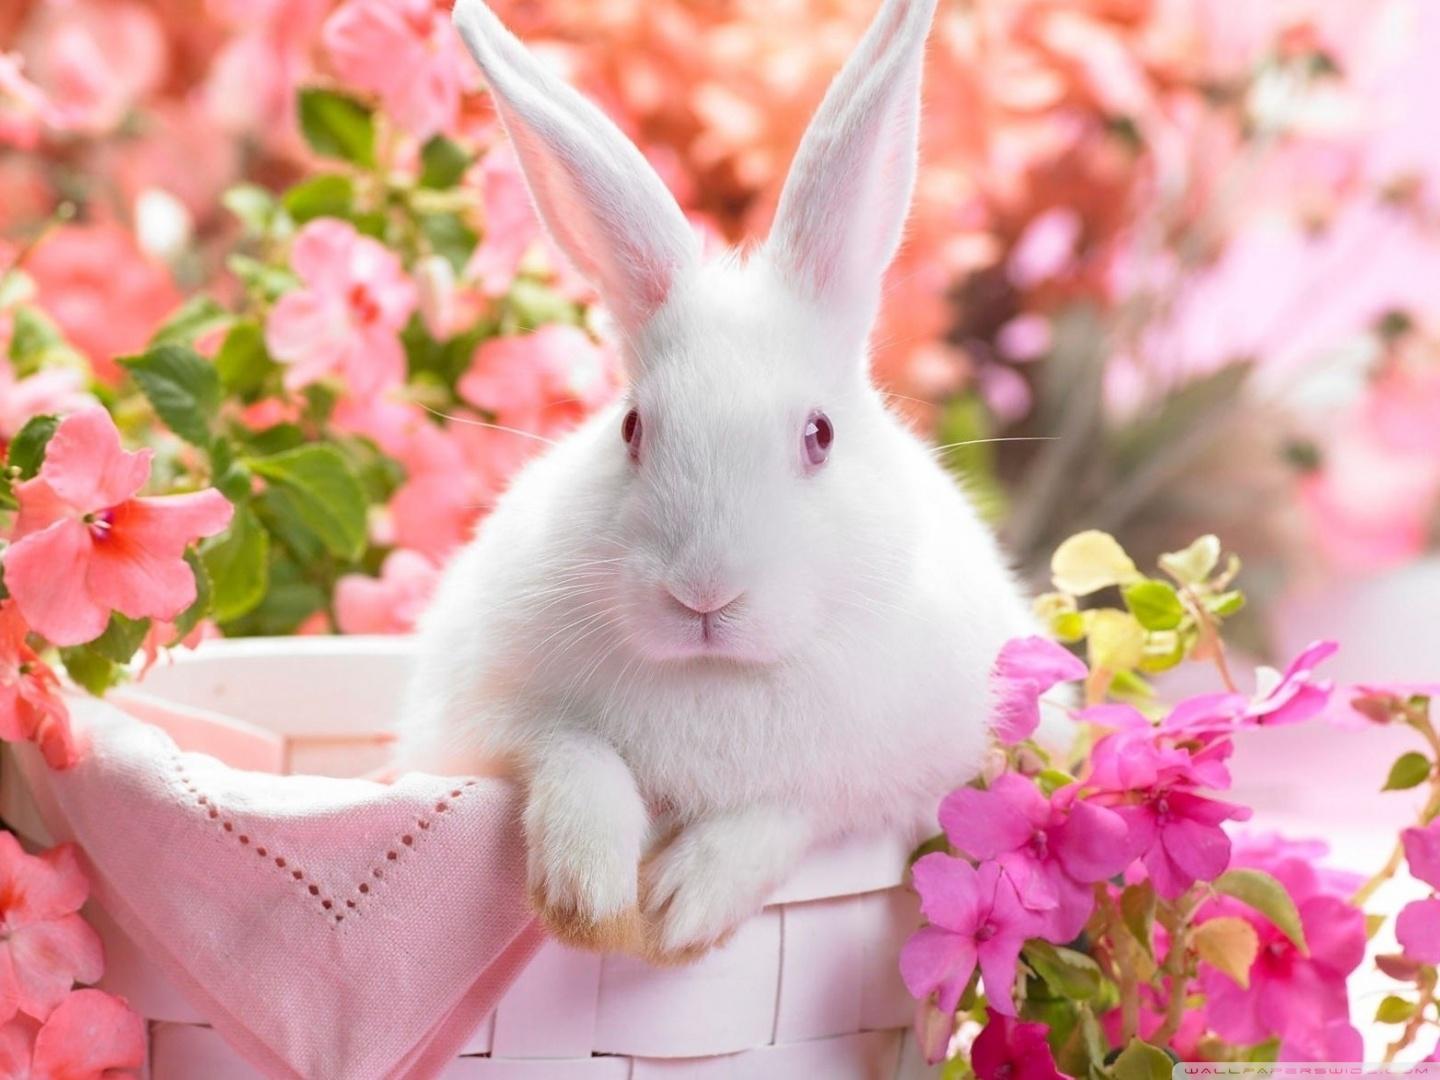 Cute Easter Bunny Ultra HD Desktop Background Wallpaper for 4K UHD TV, Tablet